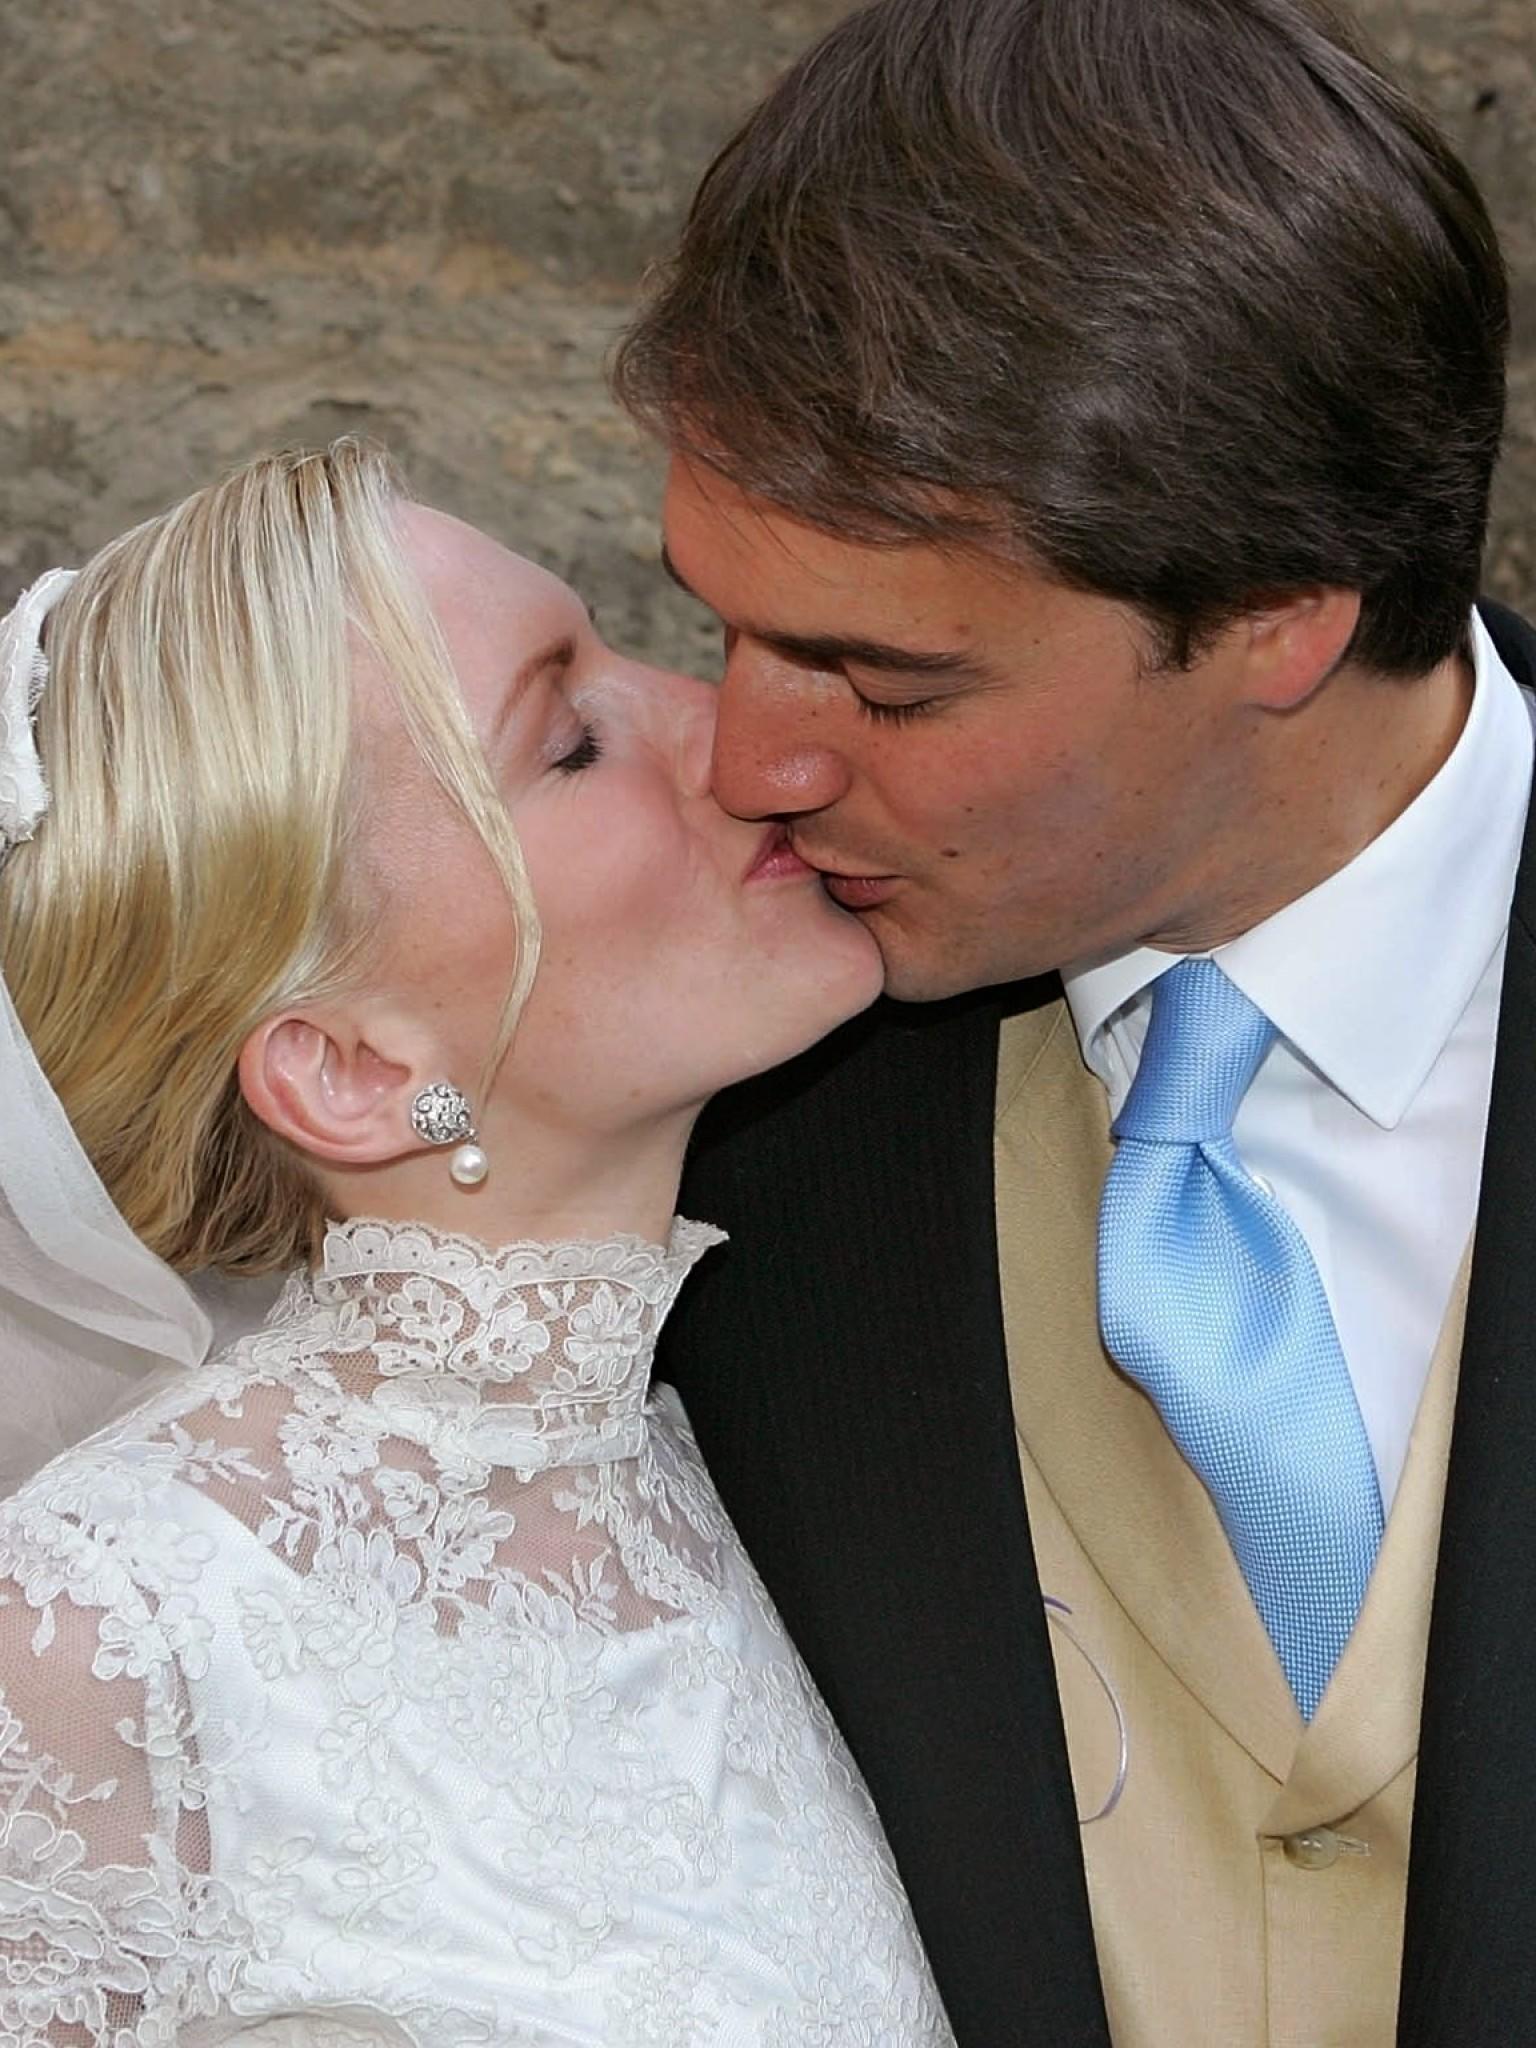 Royale Hochzeitsküsse, Kuss, Kusstypen